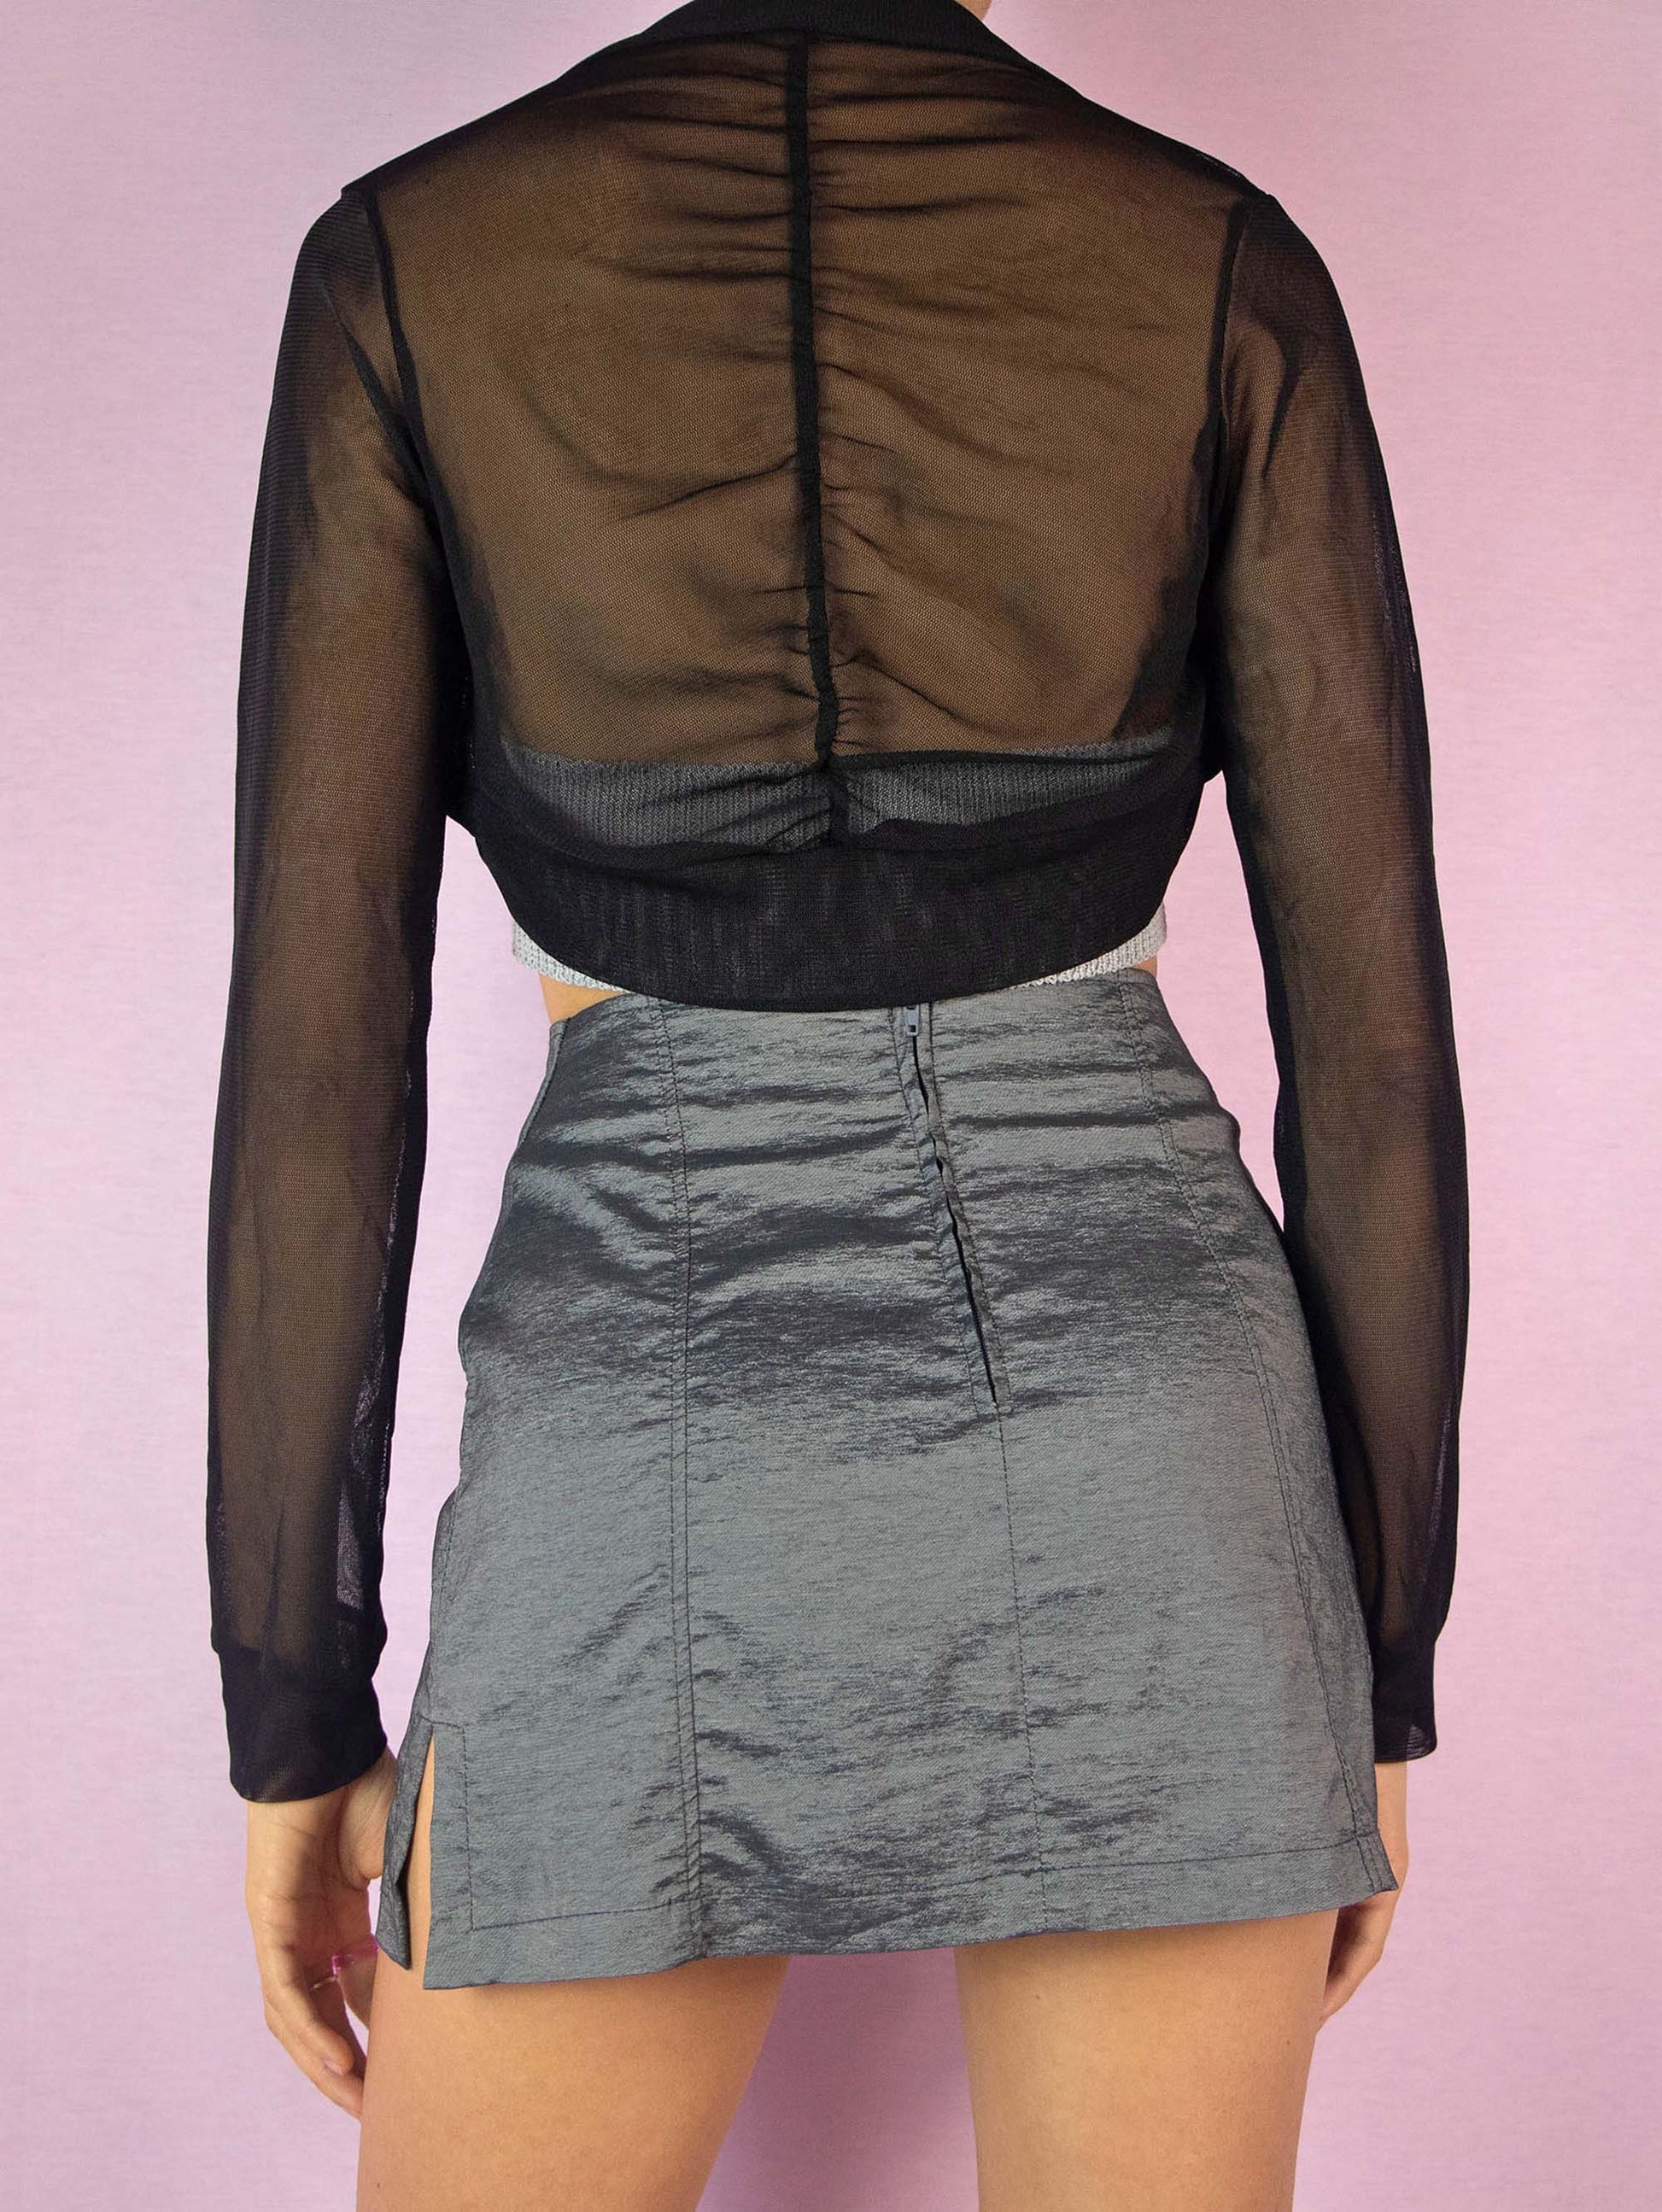 The Y2K Black Mesh Shrug Bolero is an elegant vintage 2000s long-sleeved sheer evening party jacket.